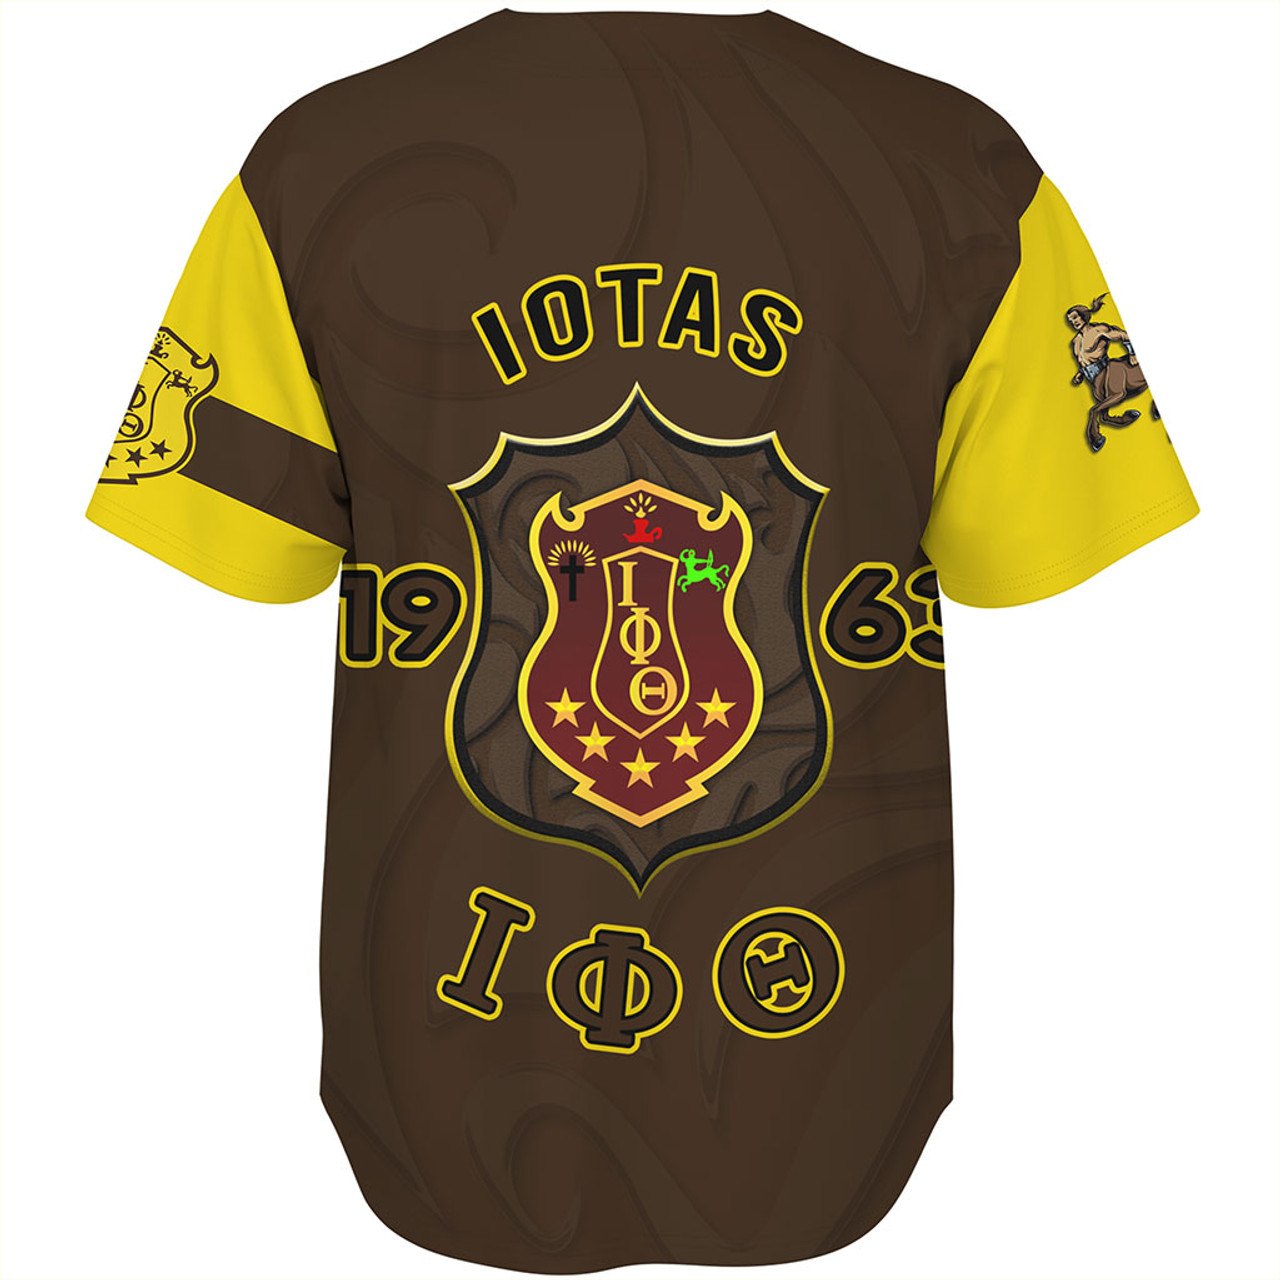 Iota Phi Theta Baseball Shirt Motto